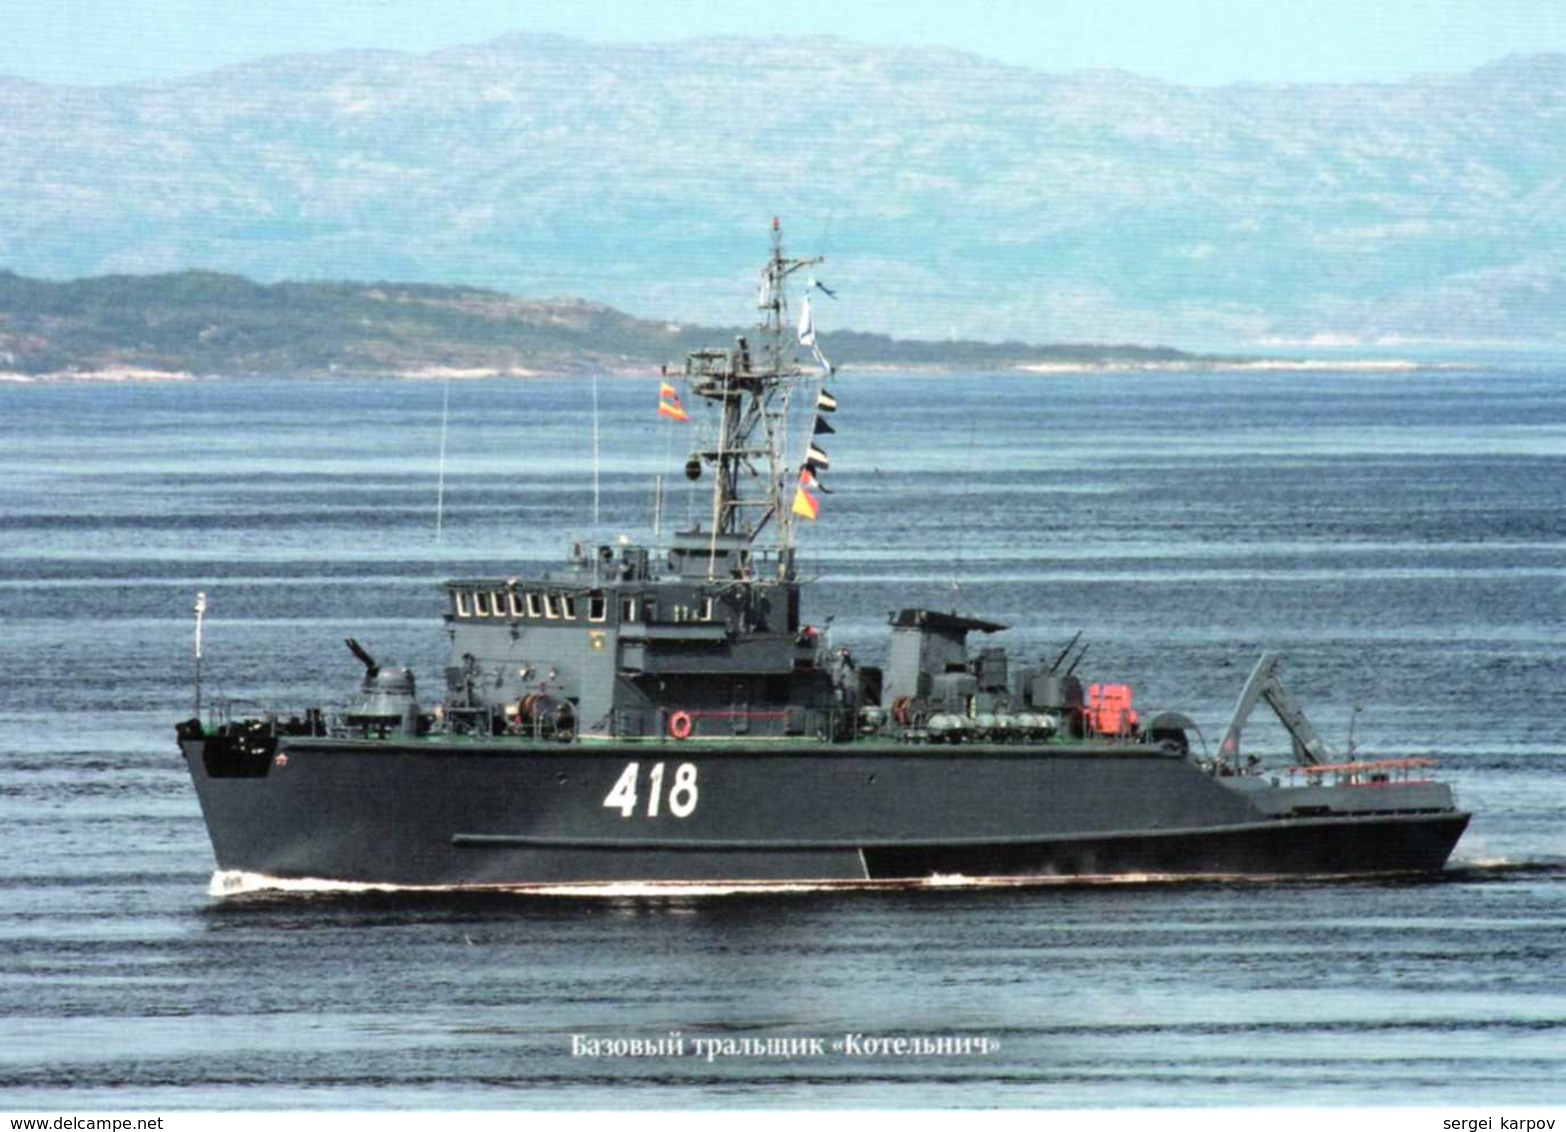 Russian Navy, part I (Russian Northern Navy Fleet), 2014.